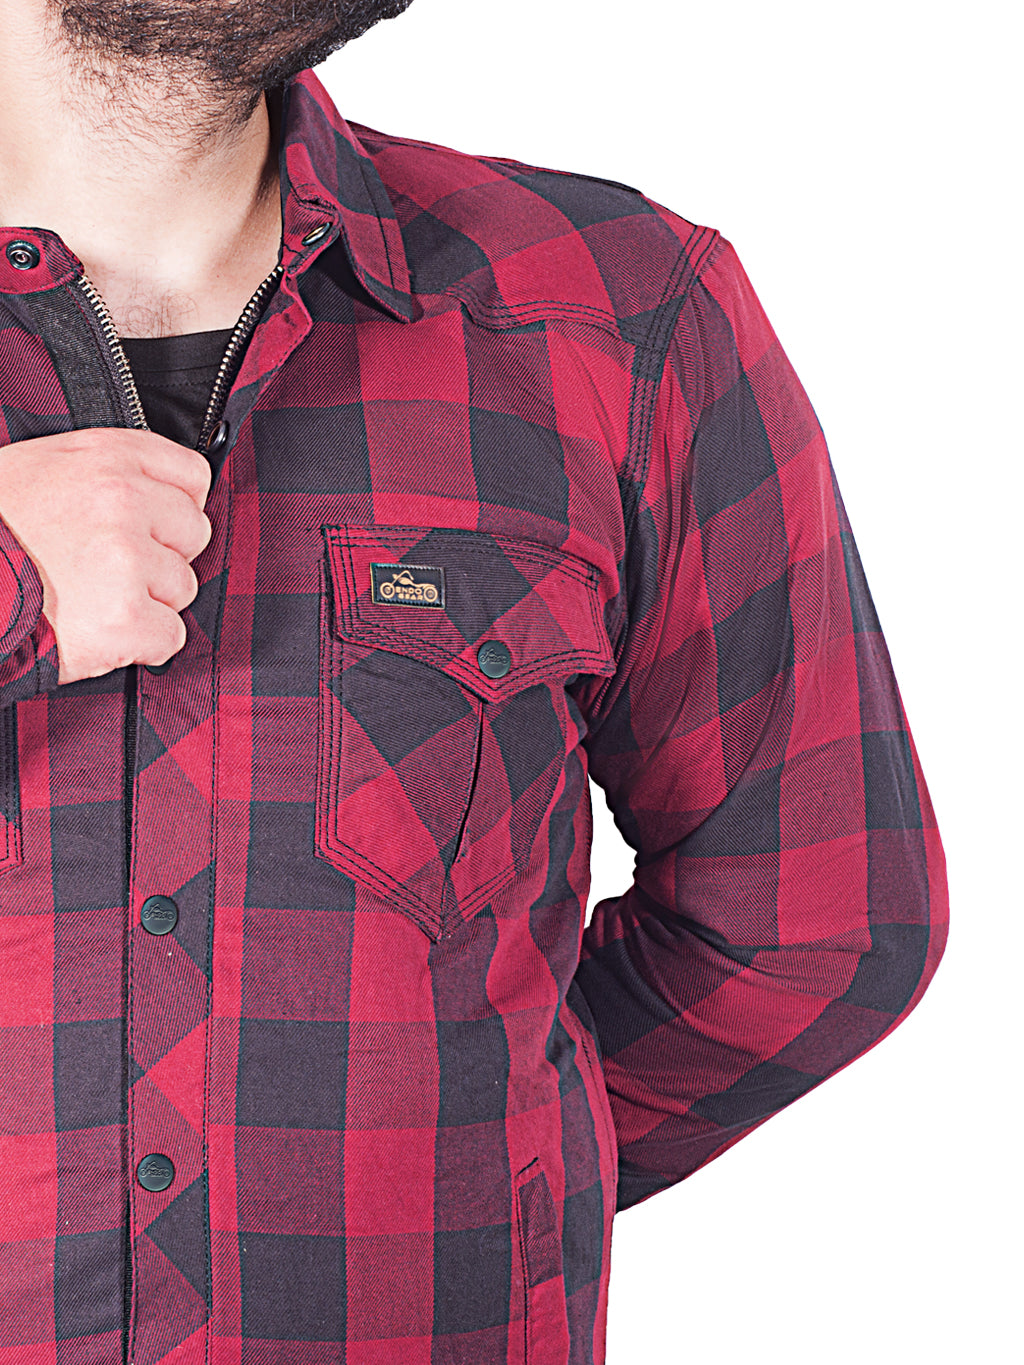 Cruiser Flannel Rider Shirt | Cruiser Flannel Red Shirt | EndoGear